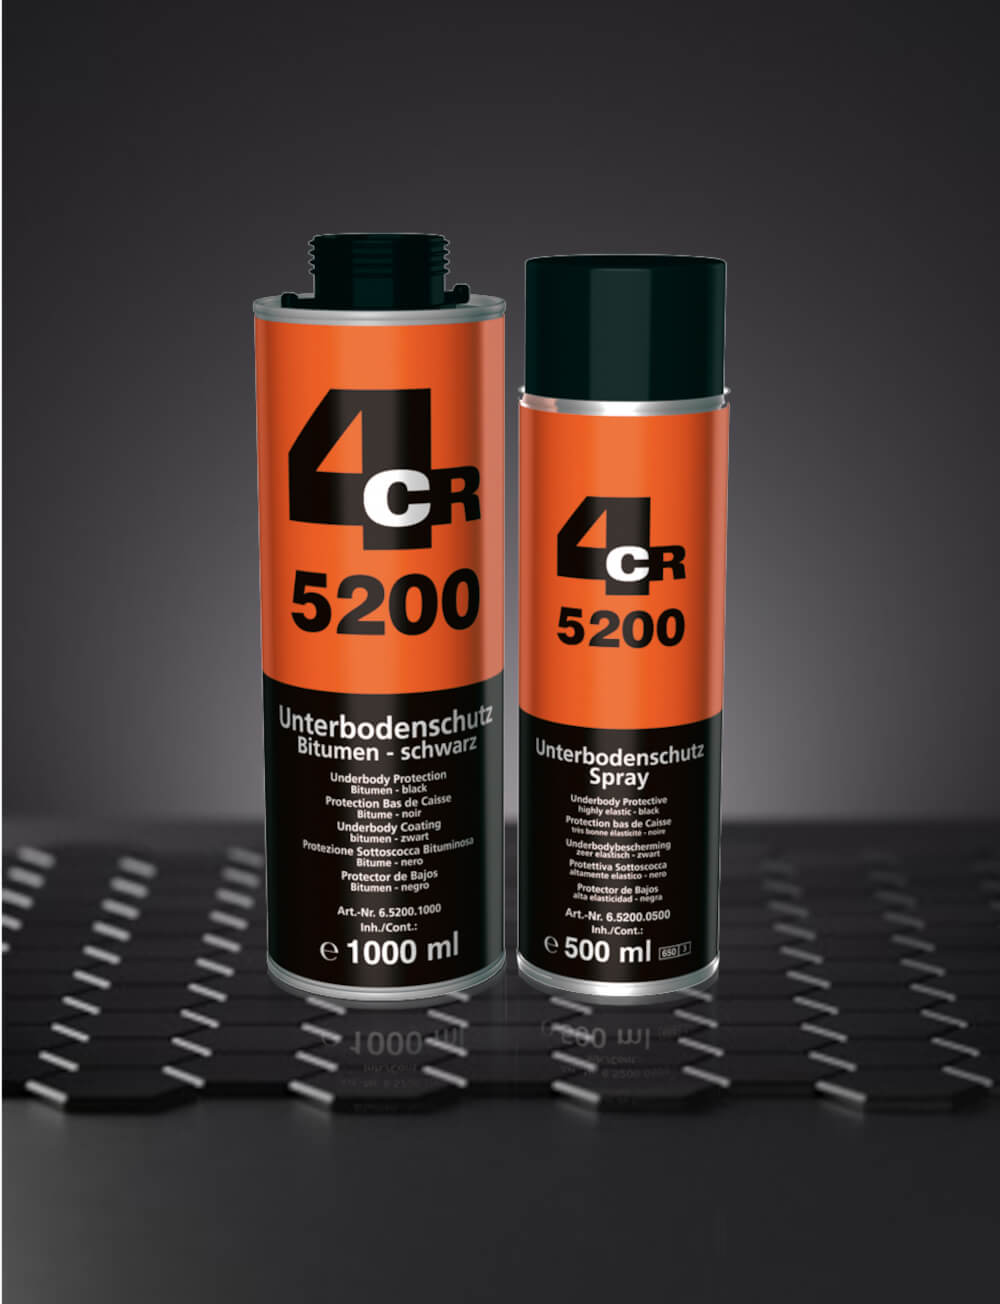 5200 Underbody Protection Bitumen - 4CR